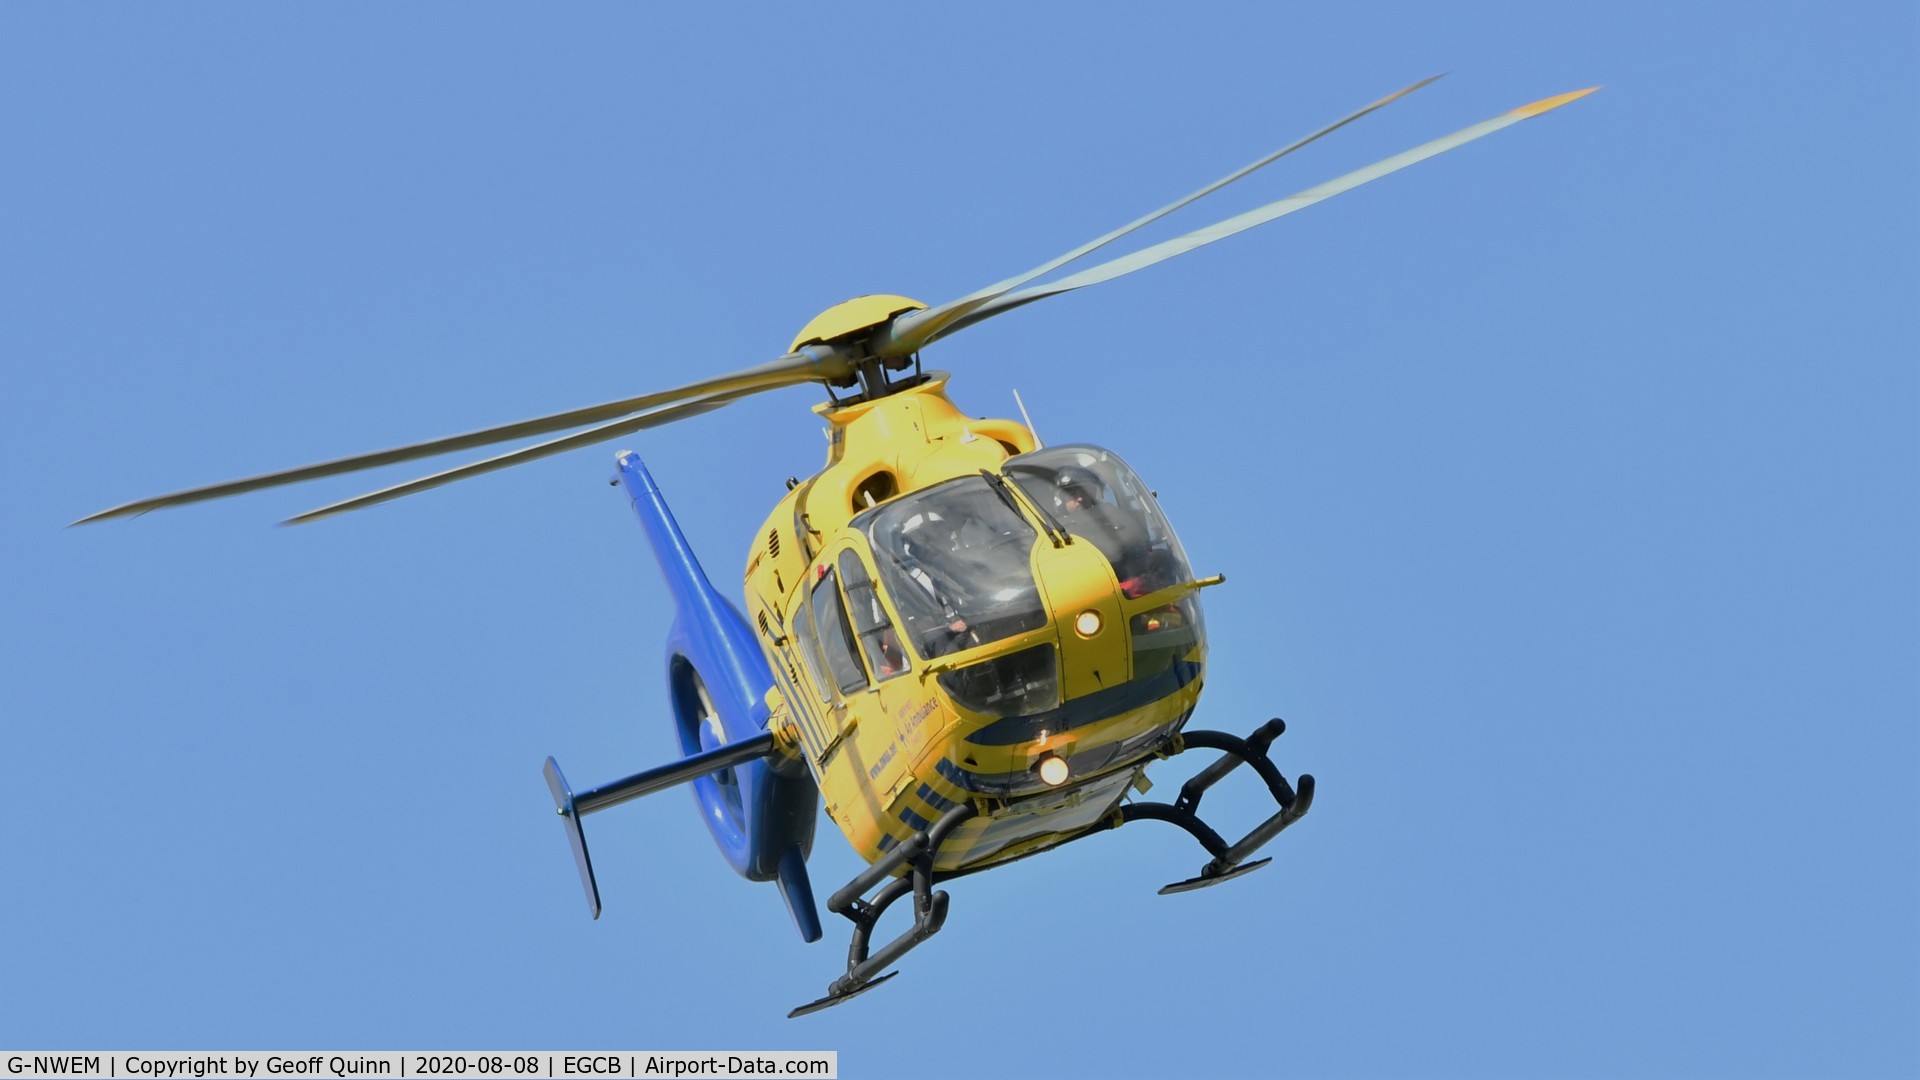 G-NWEM, 2003 Eurocopter EC-135T-2 C/N 0270, G-NWEM
08/08/2020